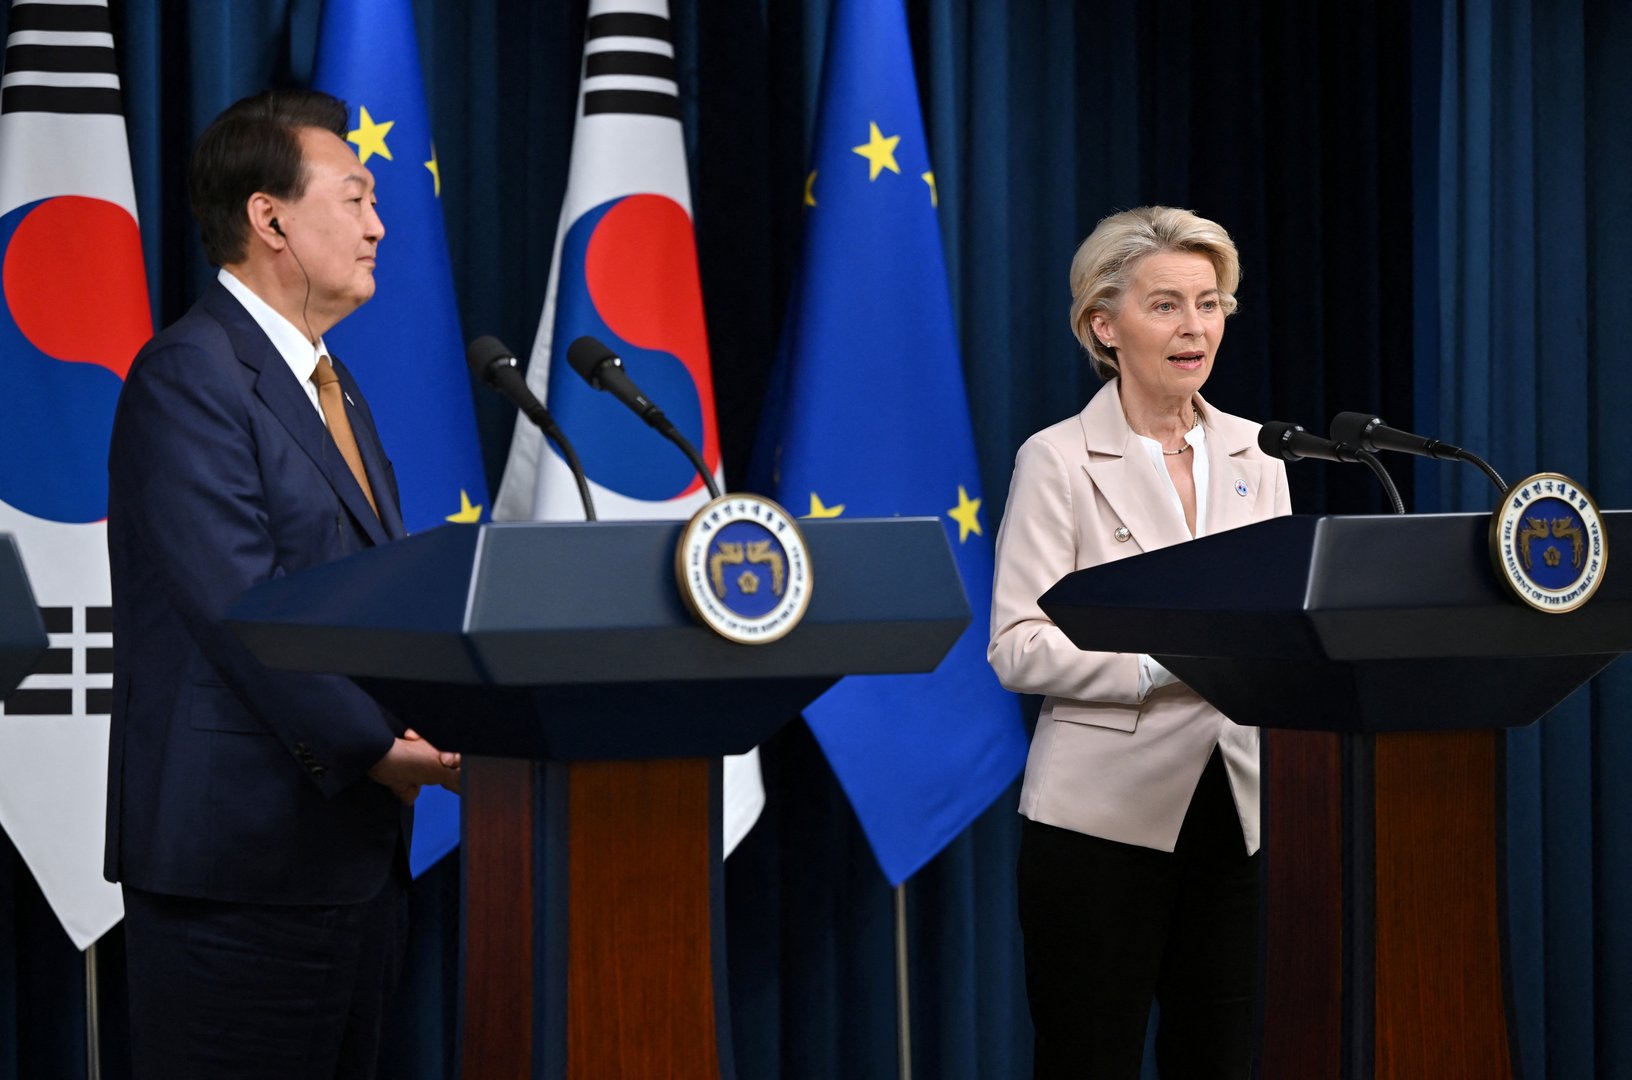 image South Korea, EU agree to boost security ties amid Ukraine, North Korea tension